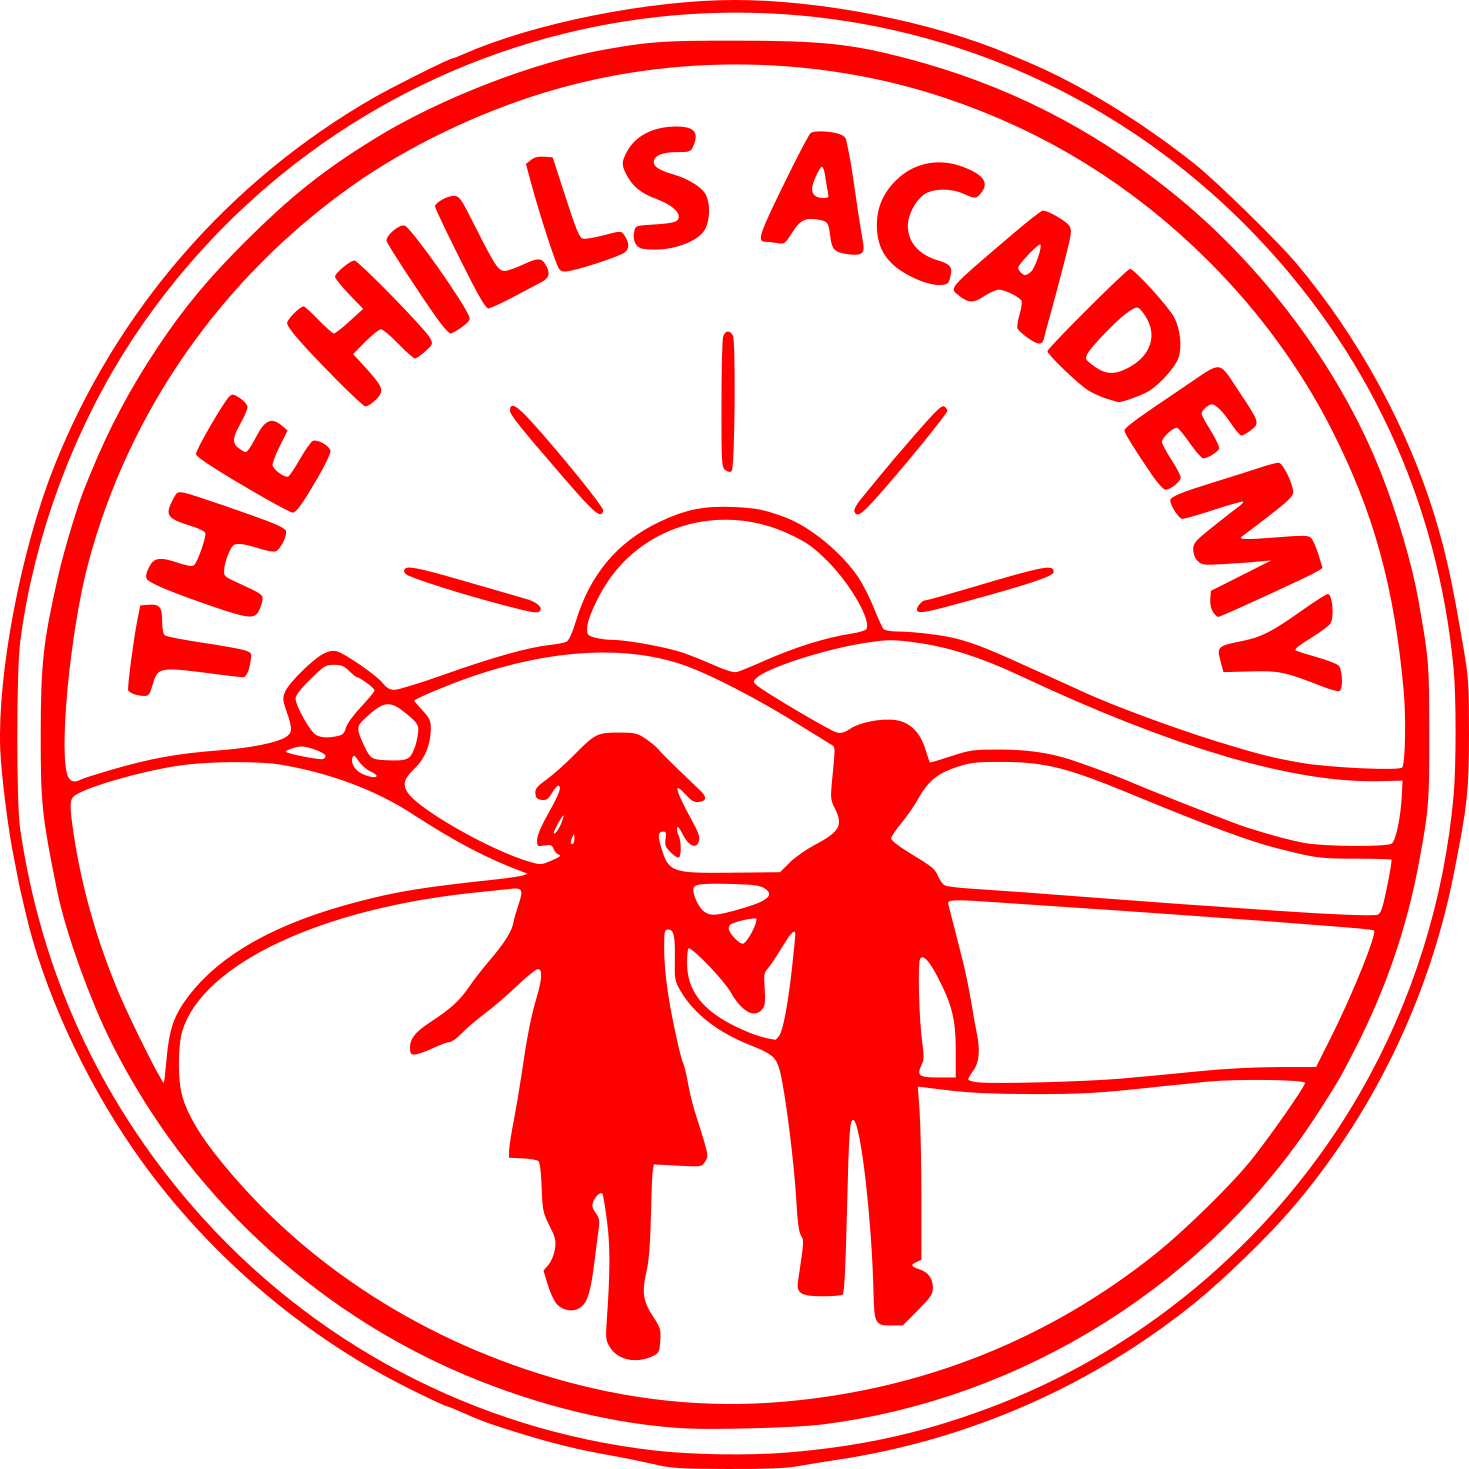 The Hills Academy PTFA